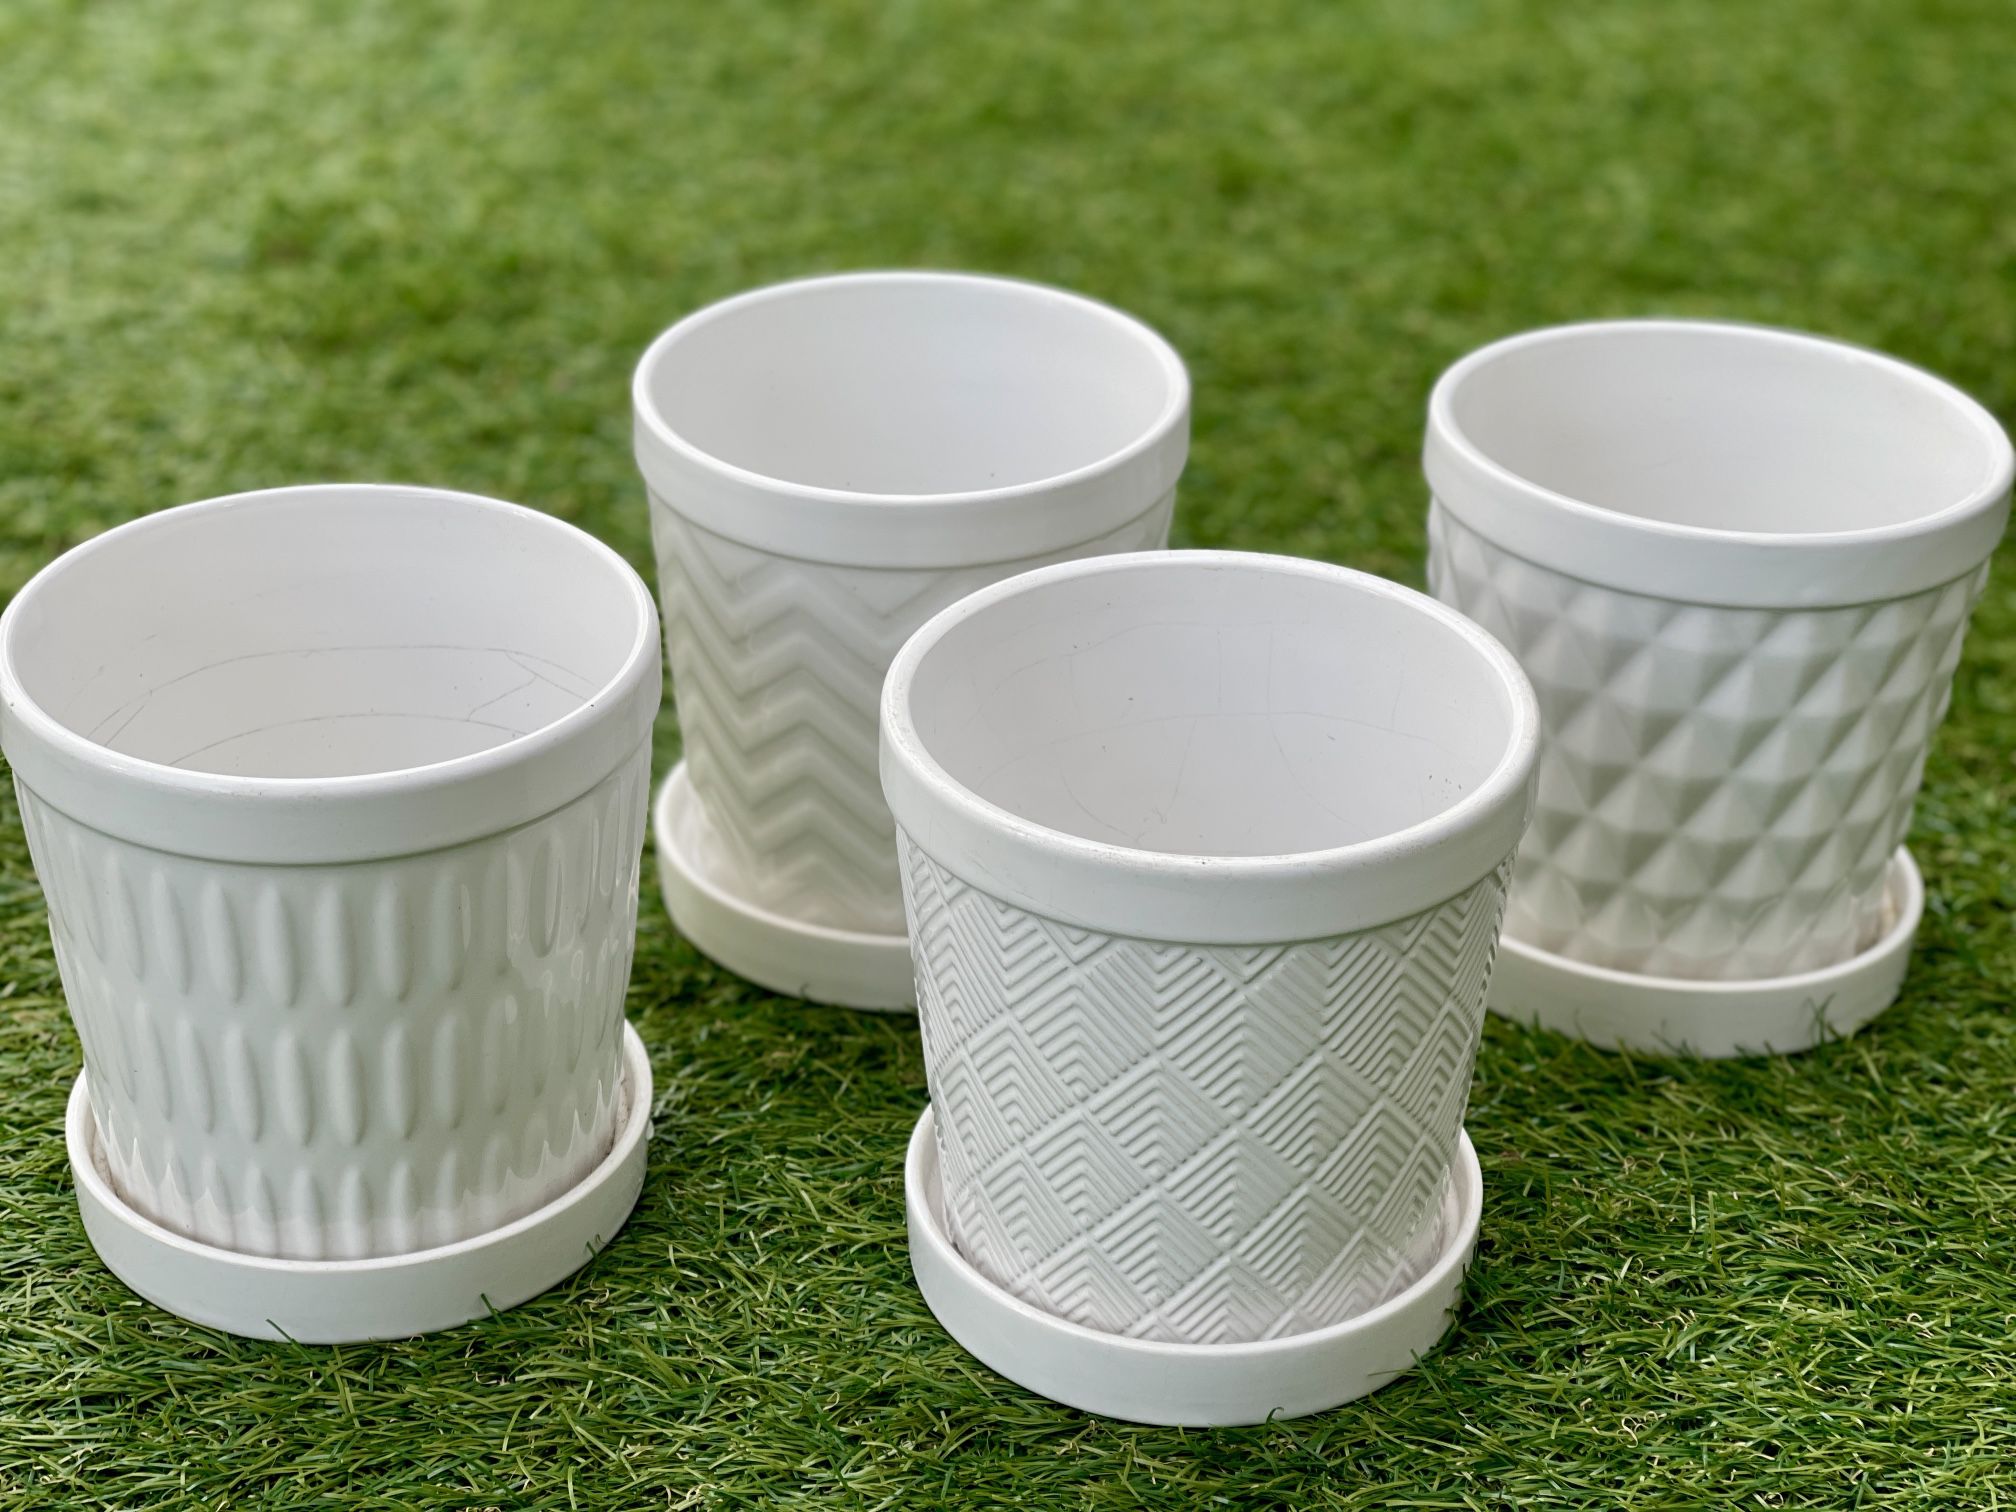 4 New Planting Pots White In Geometric Designs  5”D x 5.25”H x 